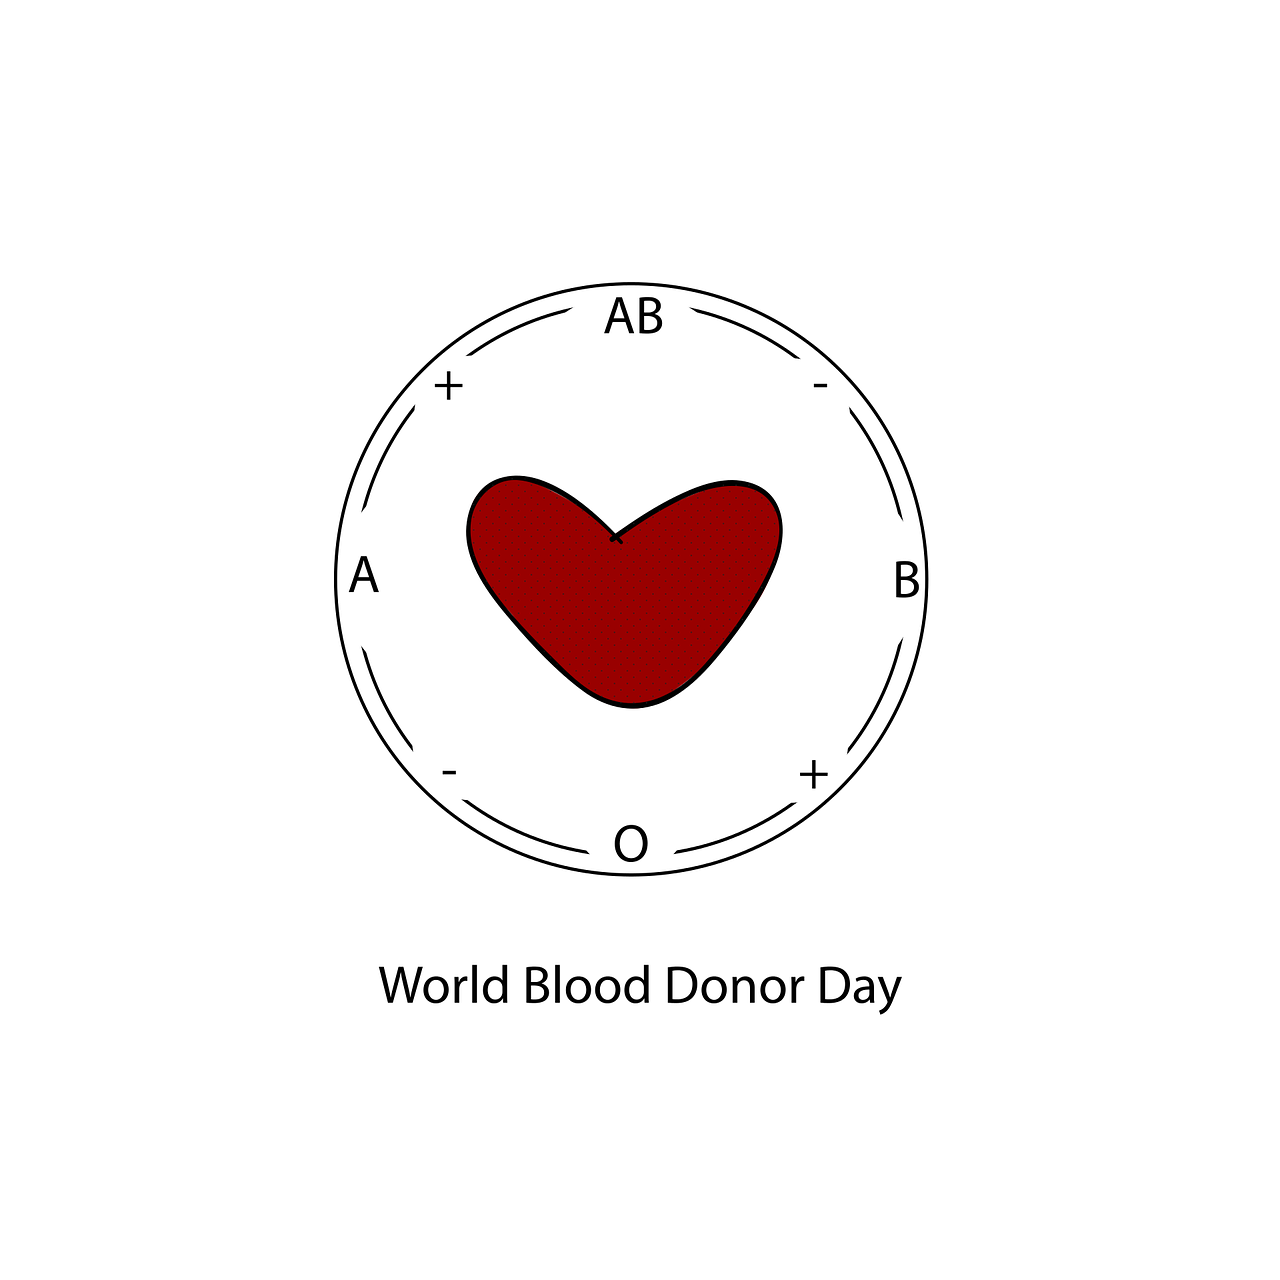 World Blood Donor Day sticker by siberian_beard of Pixabay.